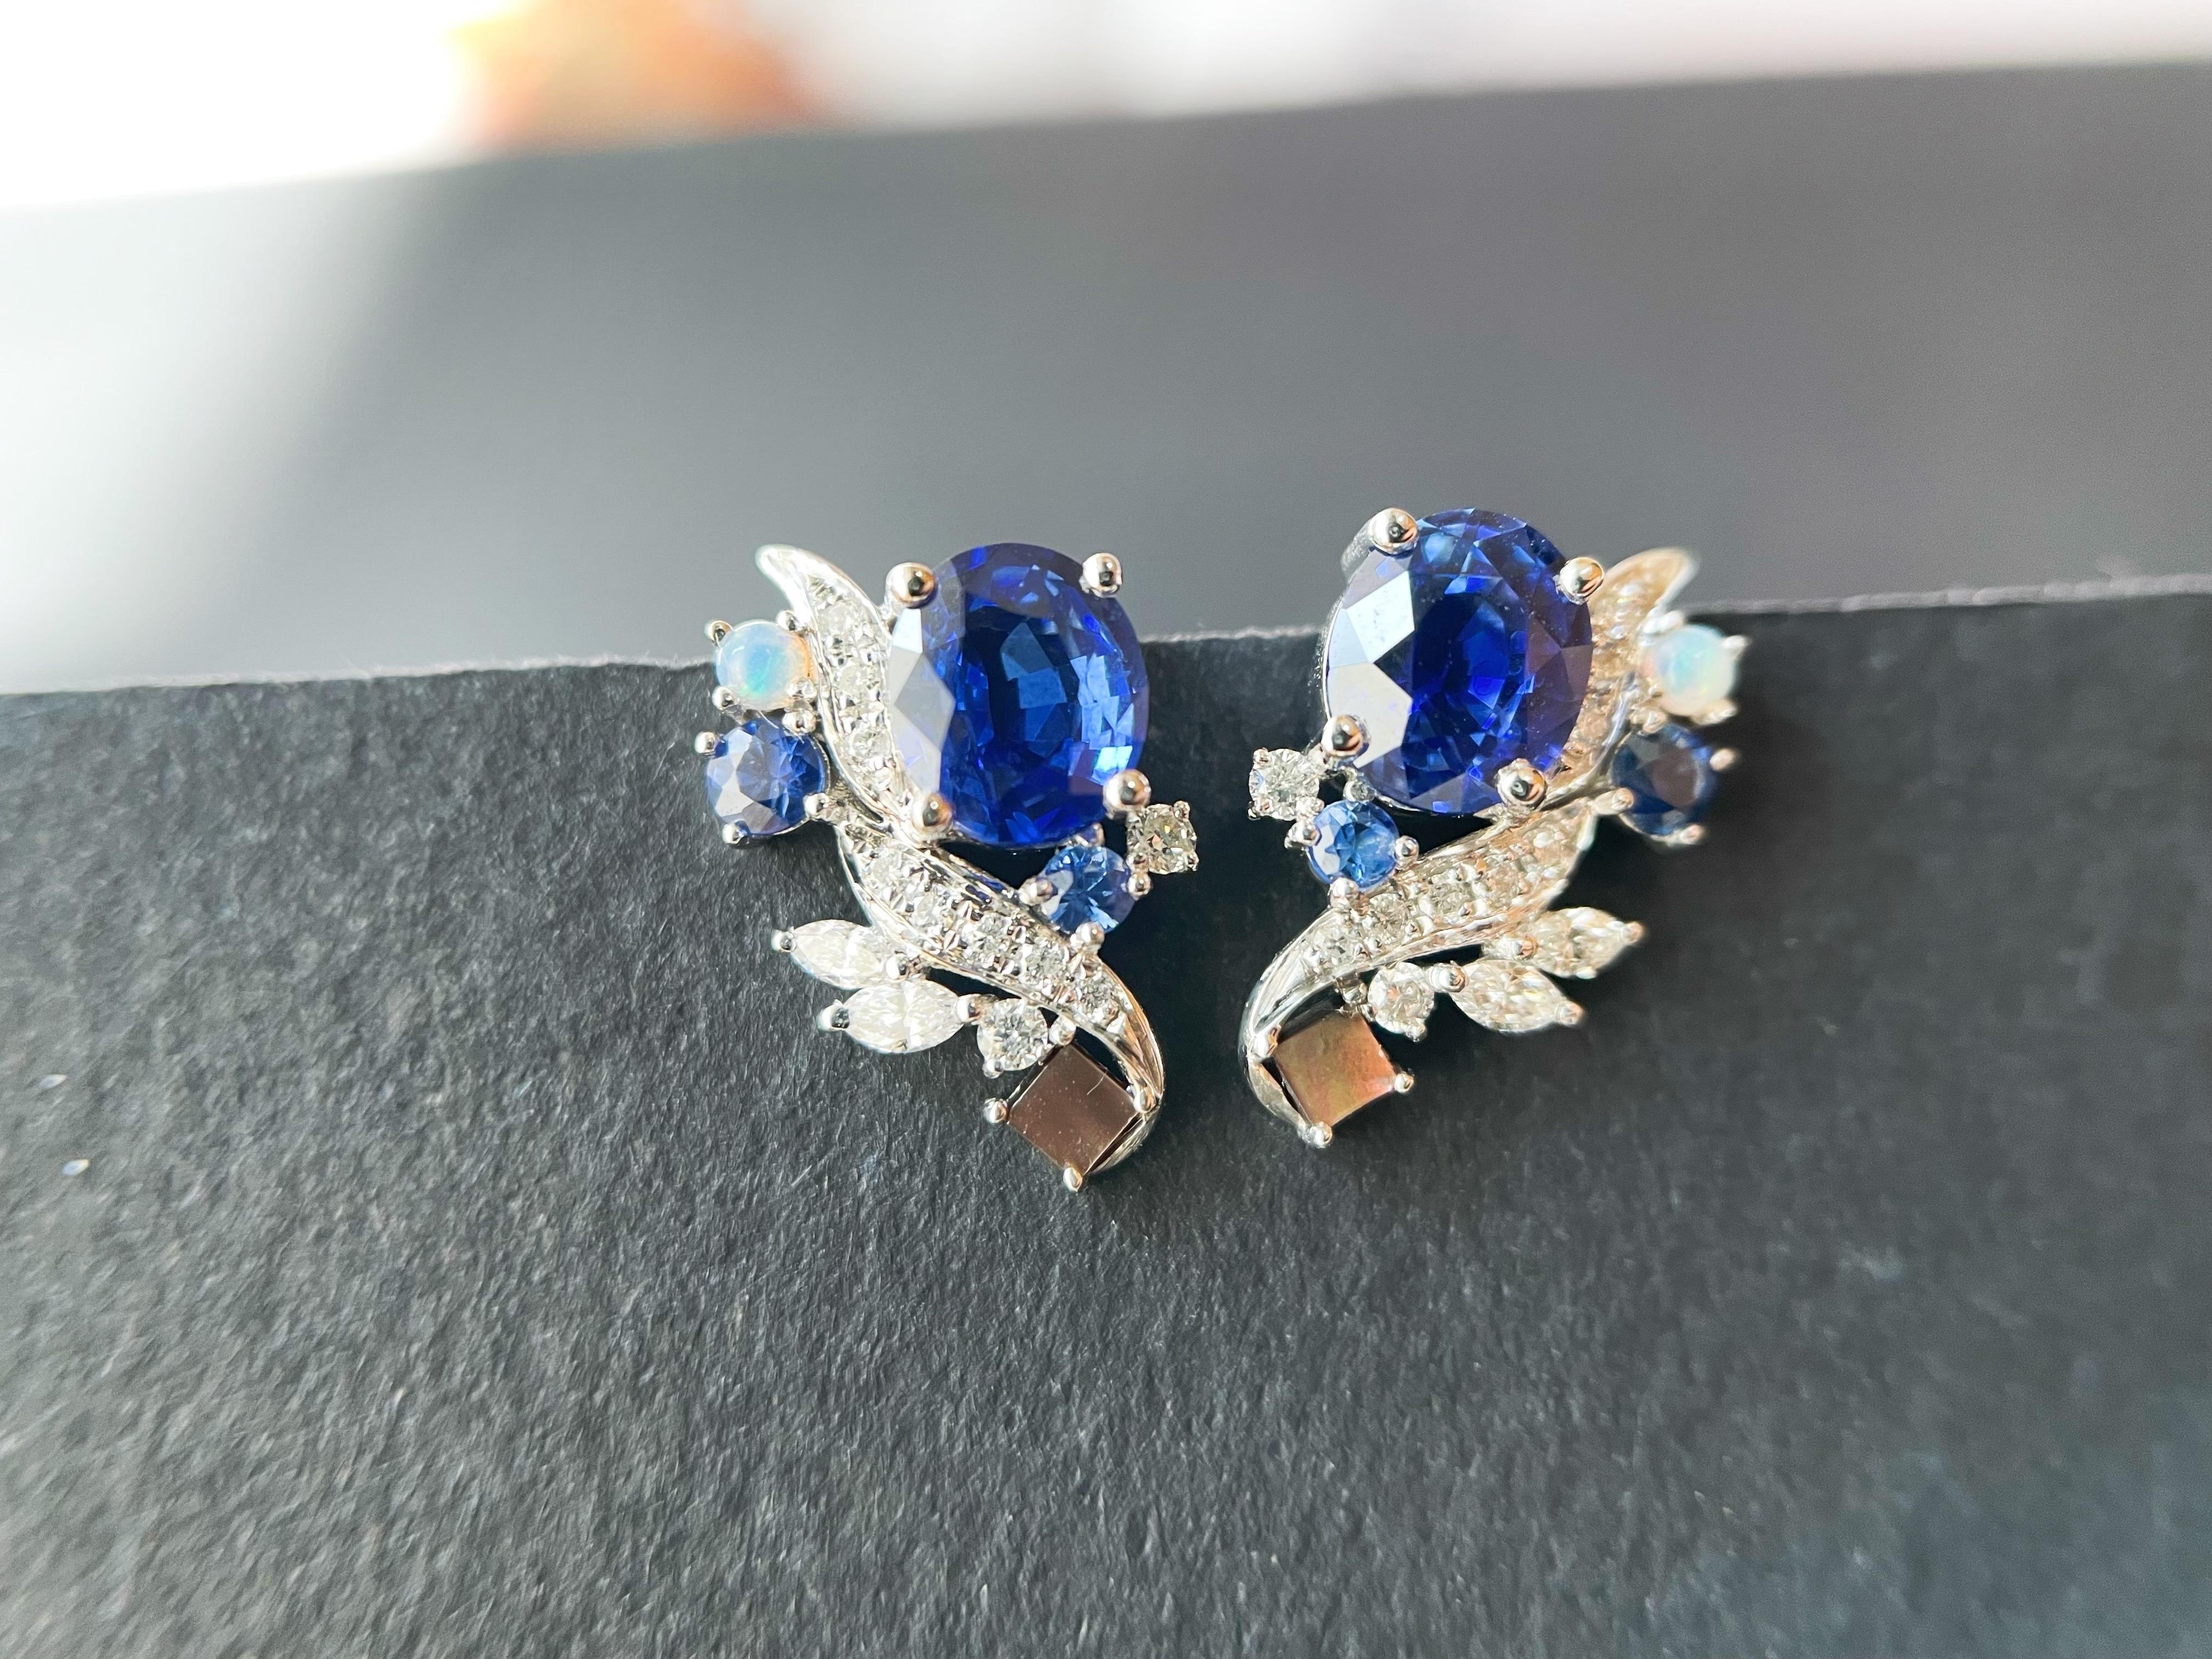 Oval Cut Natural Sri Lanka Royal Blue Sapphire Earrings in 18k White Gold, Opal, Pearl For Sale